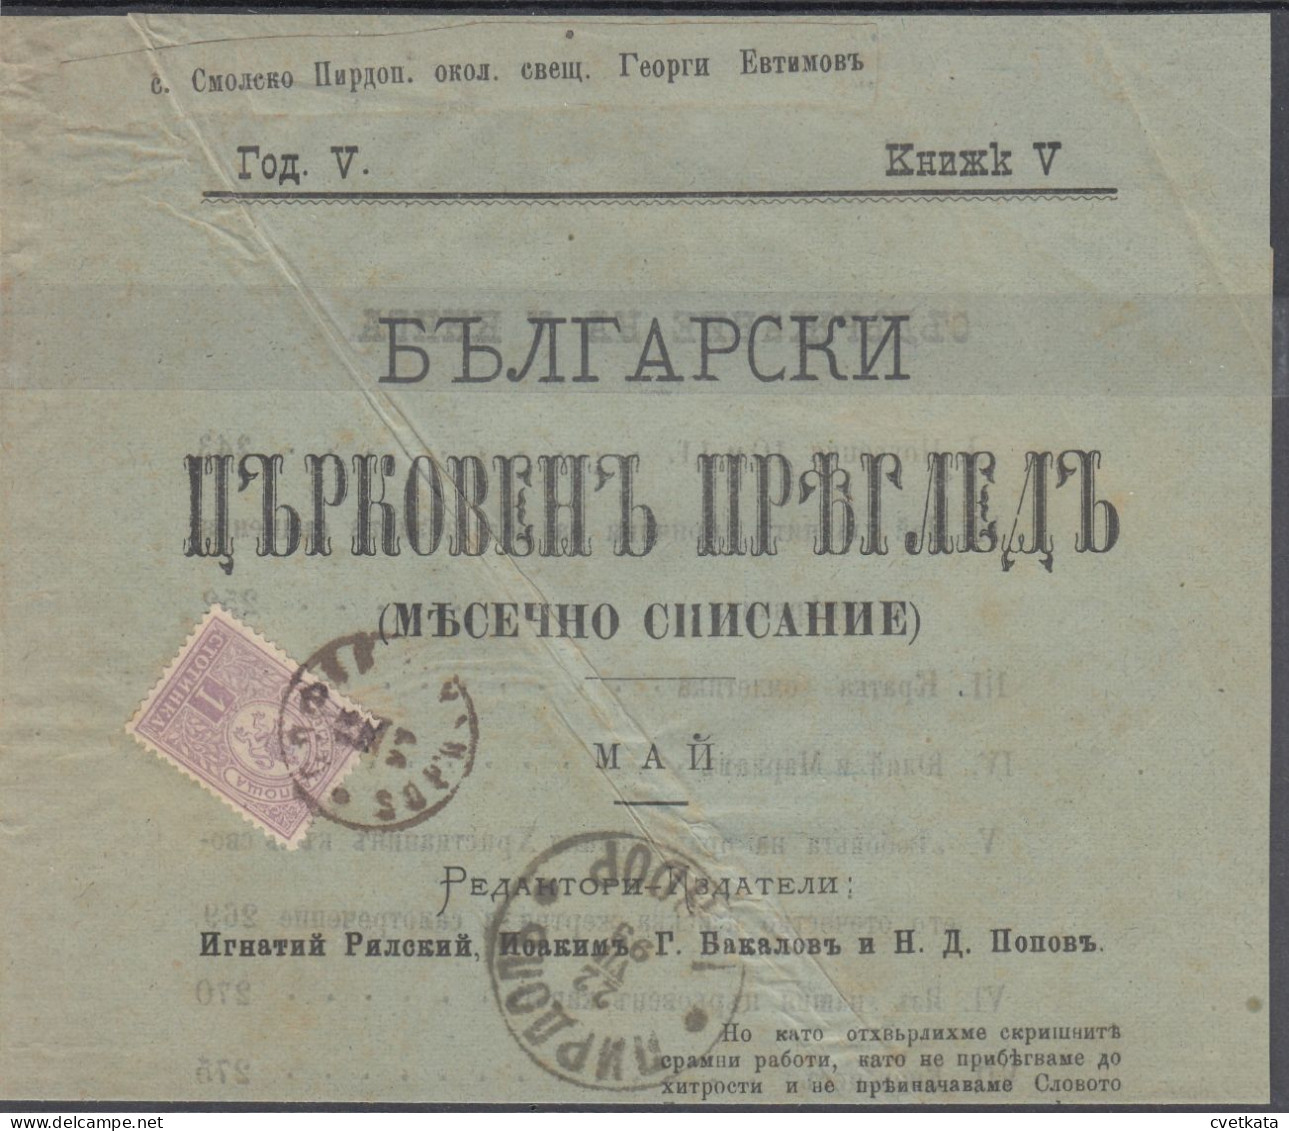 Magazine/Small Lion/traveled From Sofia To Pirdop /Mi:28 1899 Bulgaria - Covers & Documents